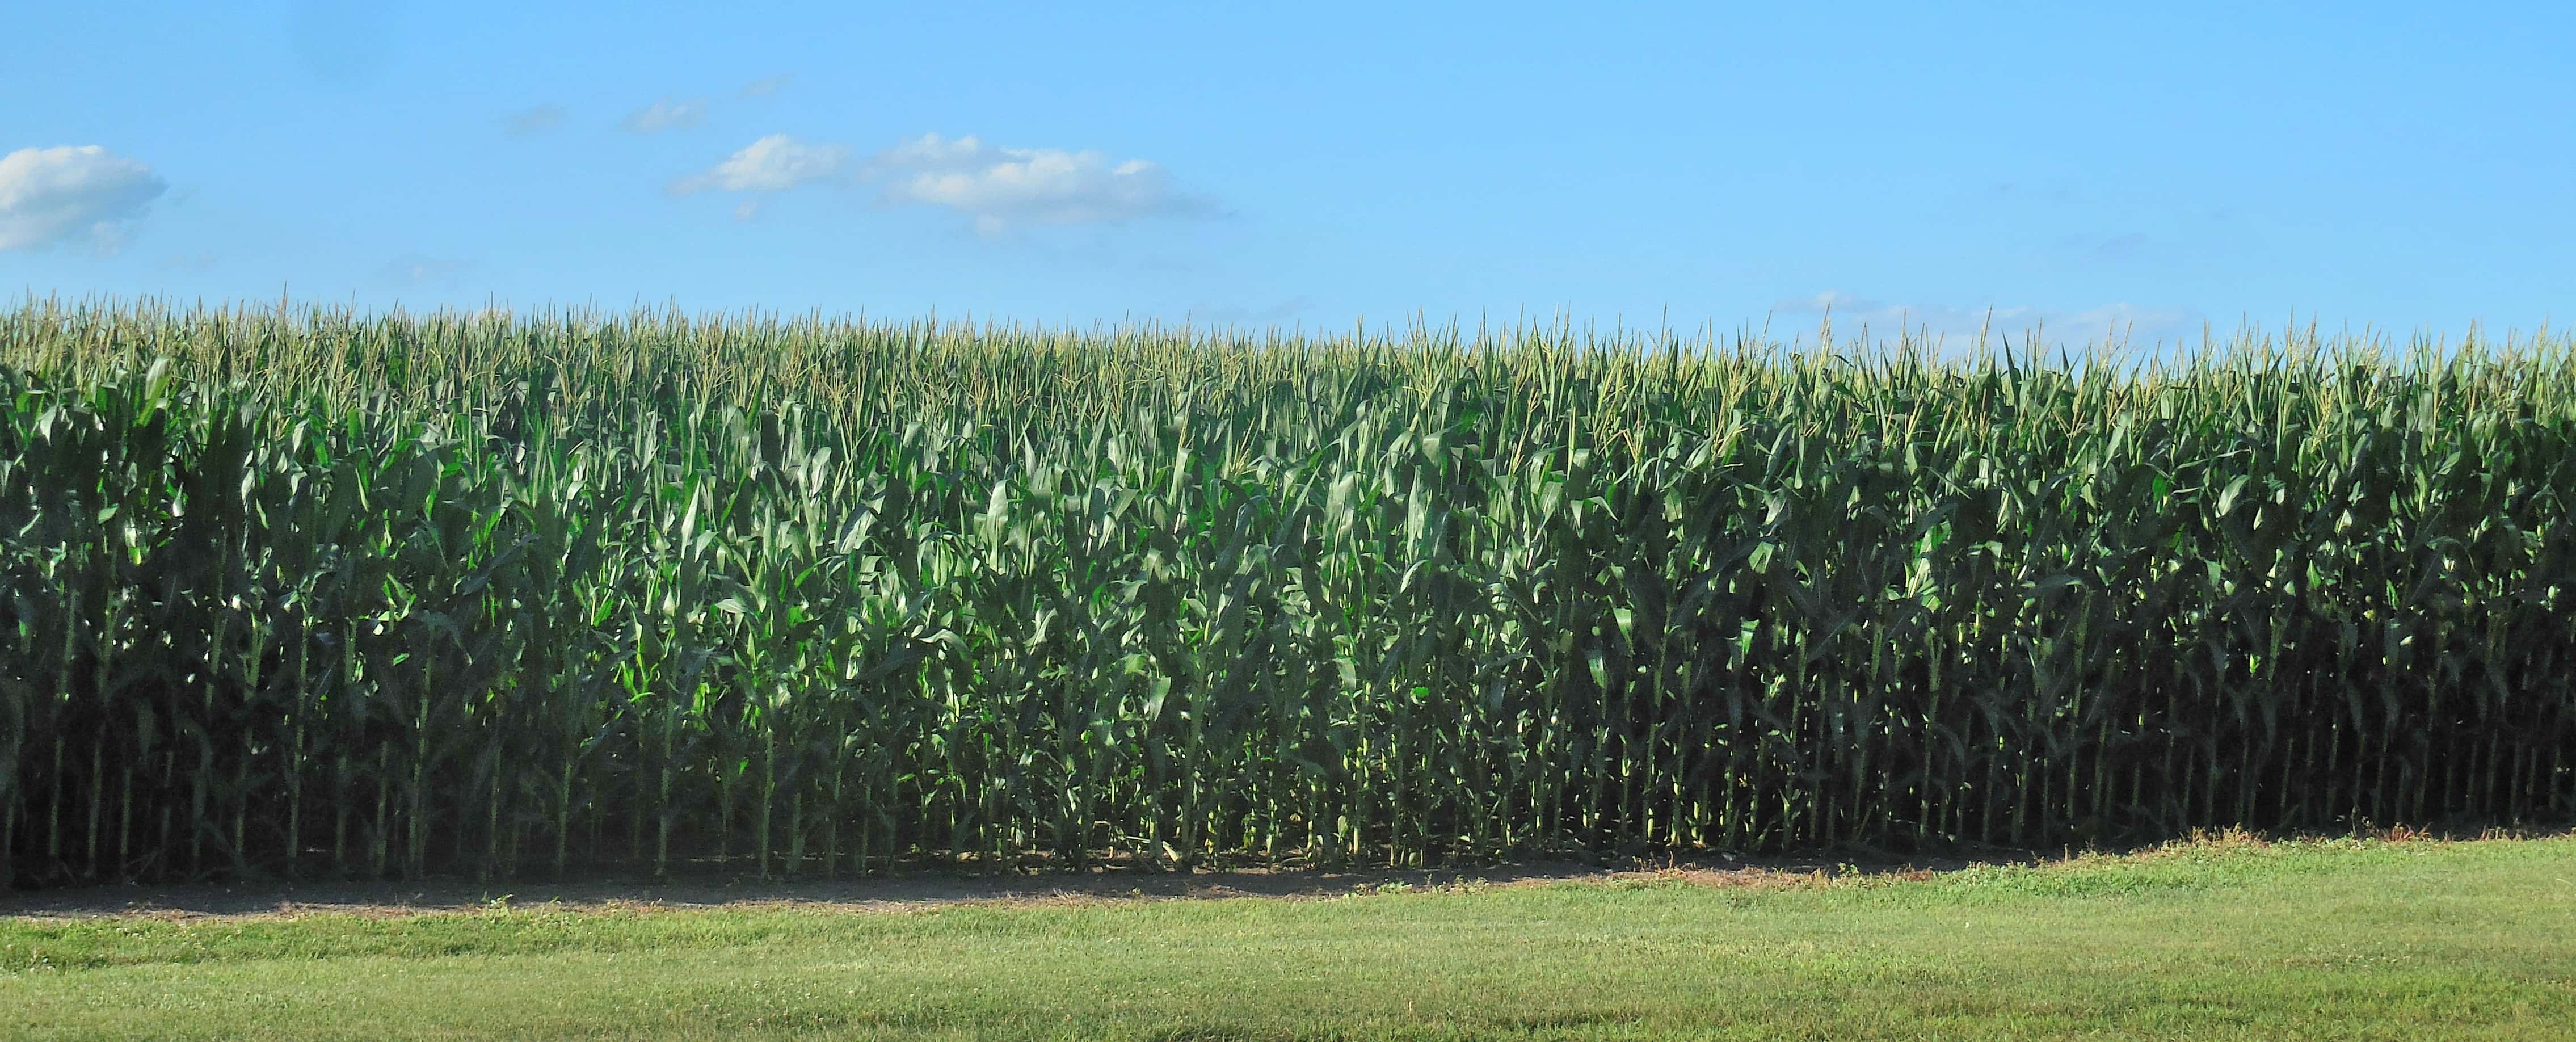 corn-crop-3